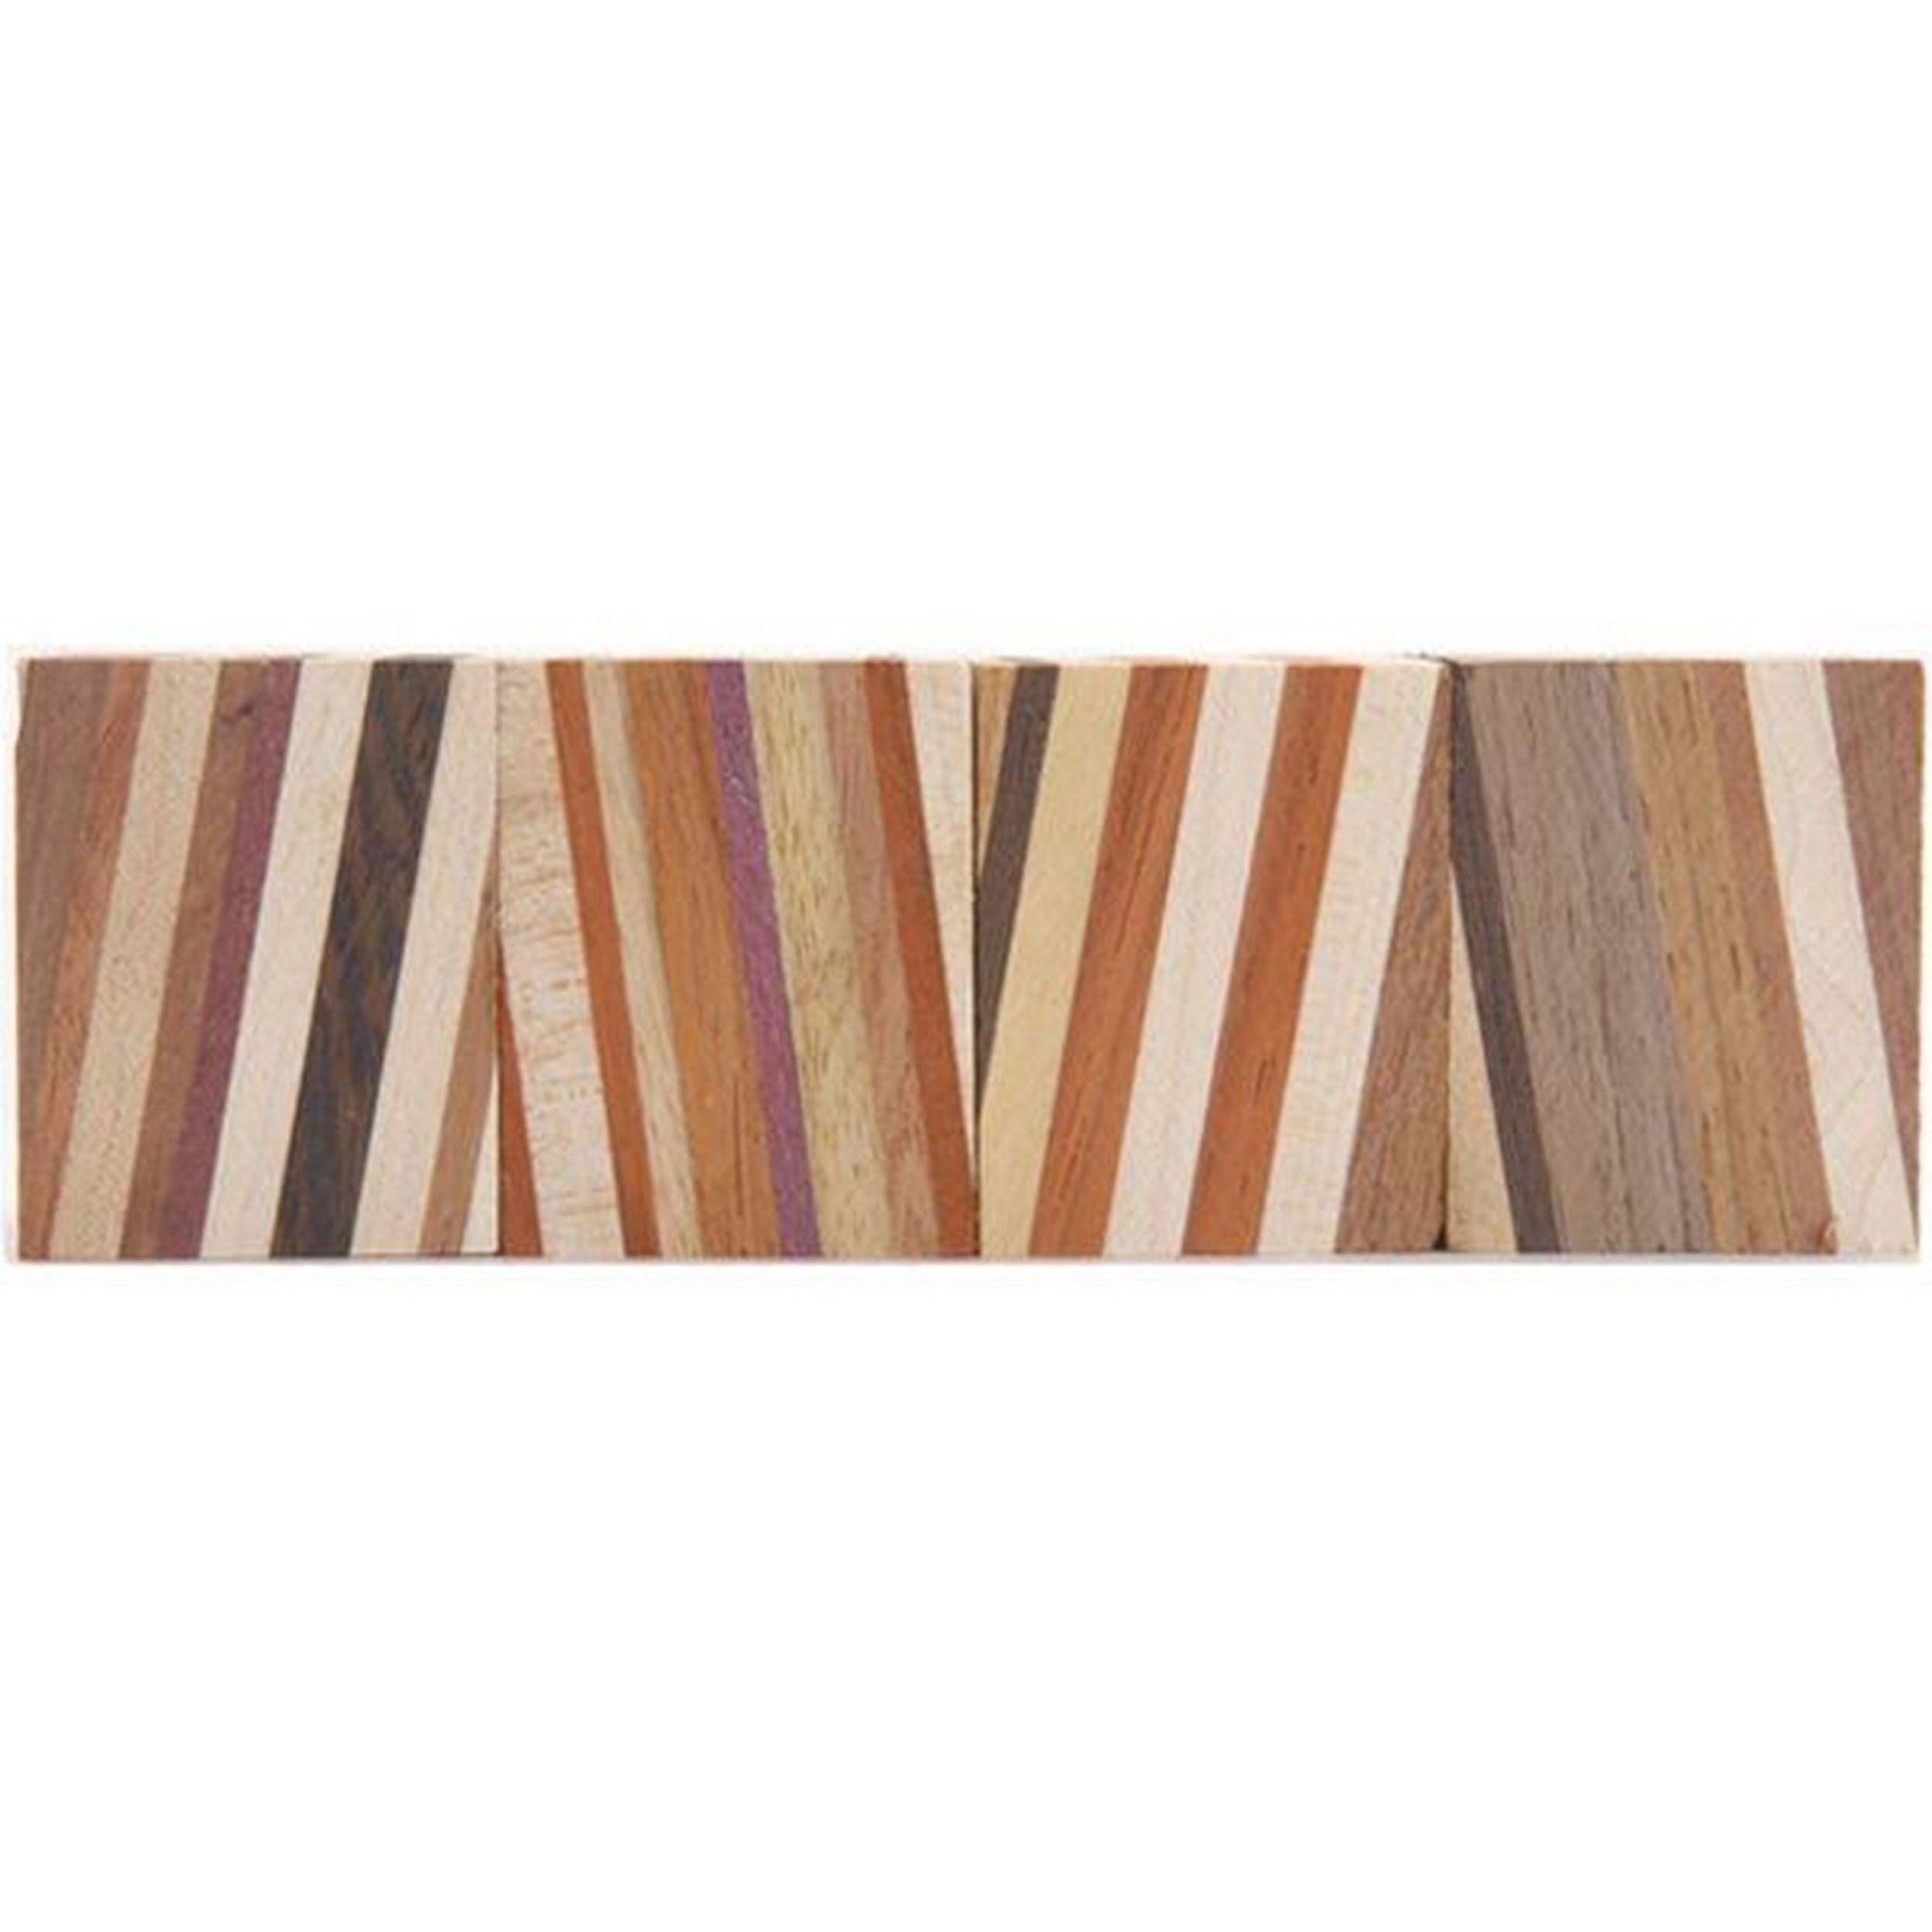 Laminated Hardwood Stopper Blanks (4)